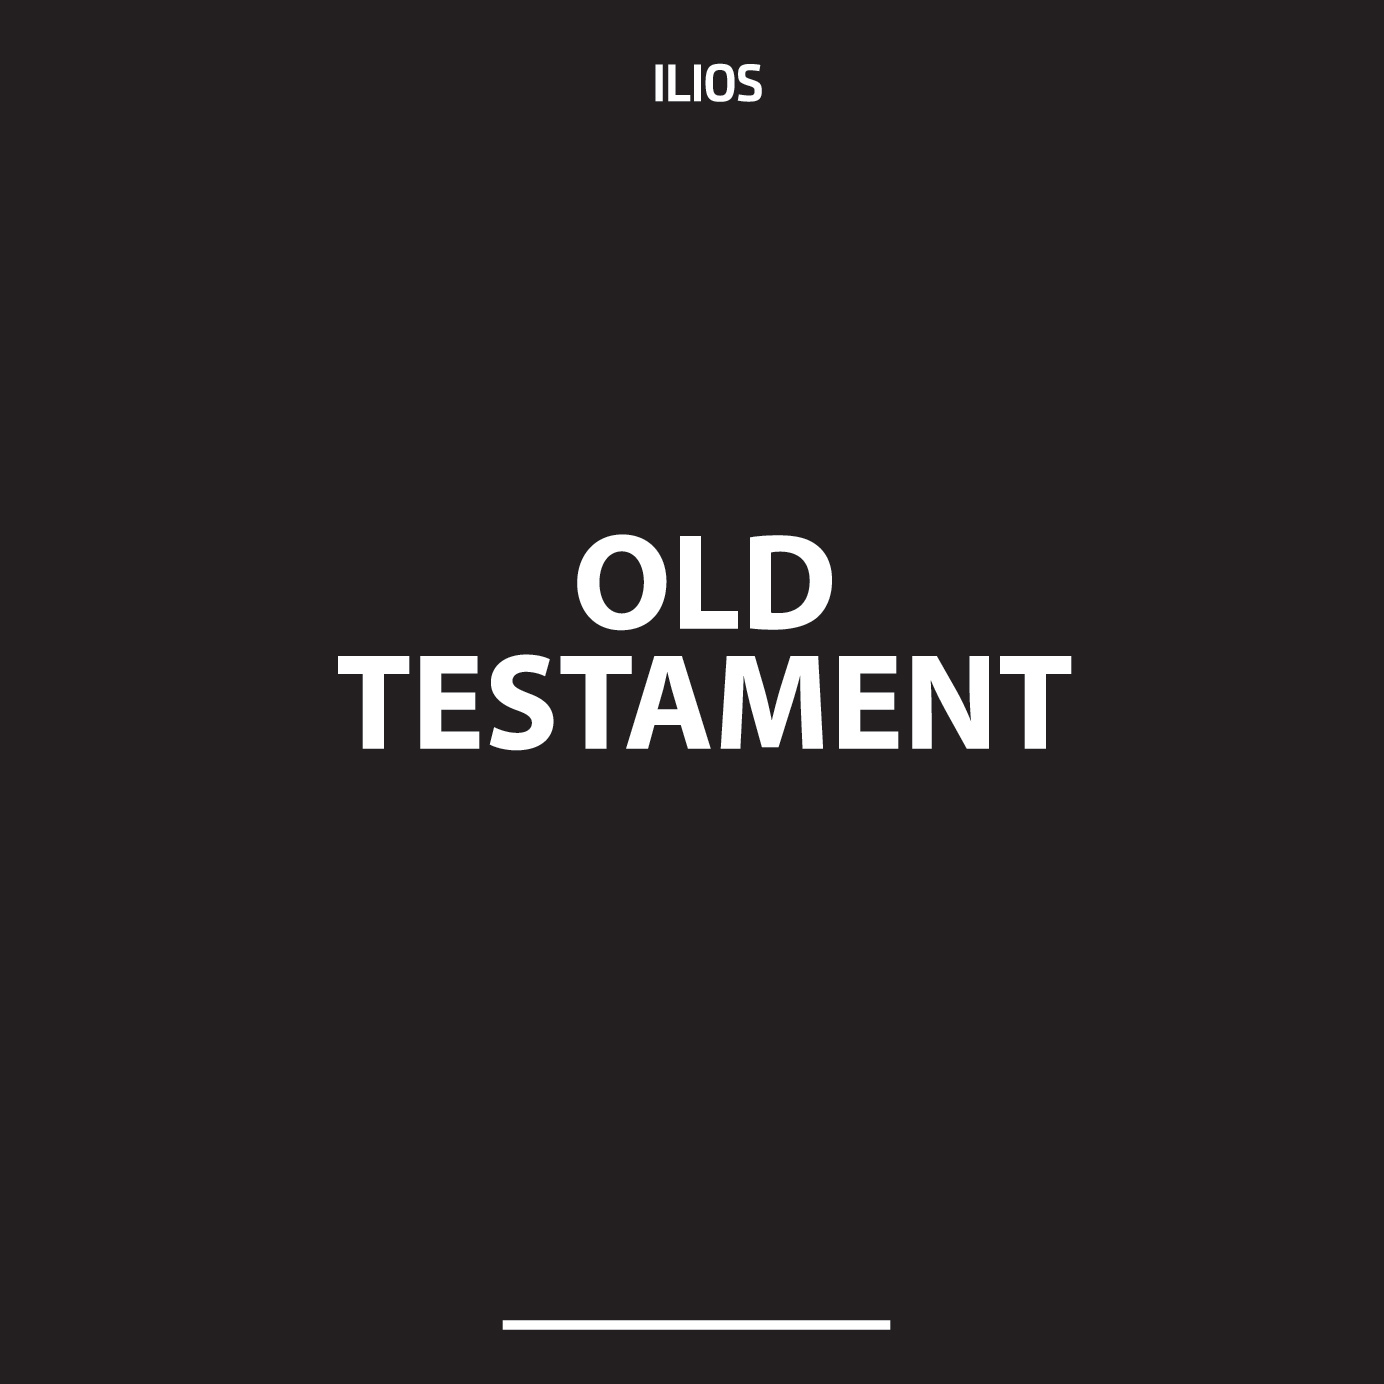 ILIOS – OLD TESTAMENT